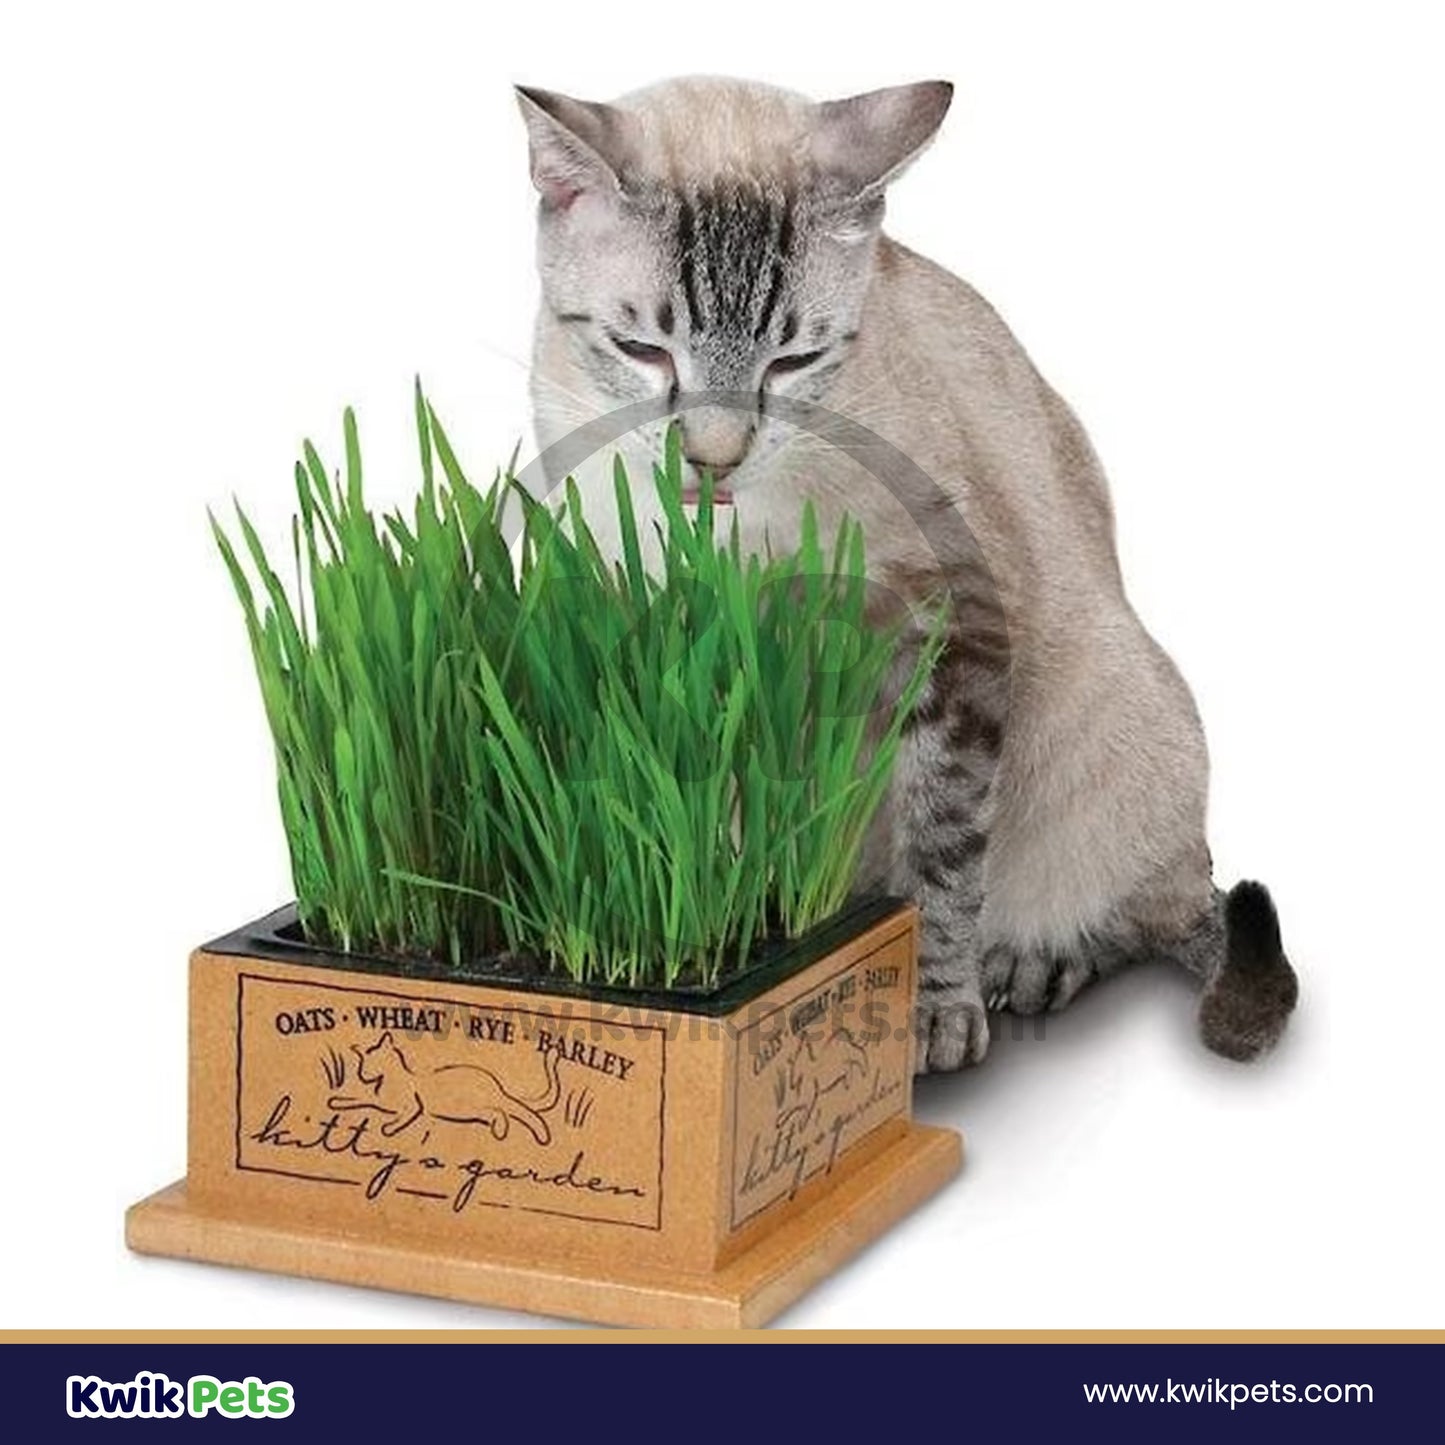 Pioneer Pet SmartCat Kitty's Natural Seeds Garden Cat's Edible Grass